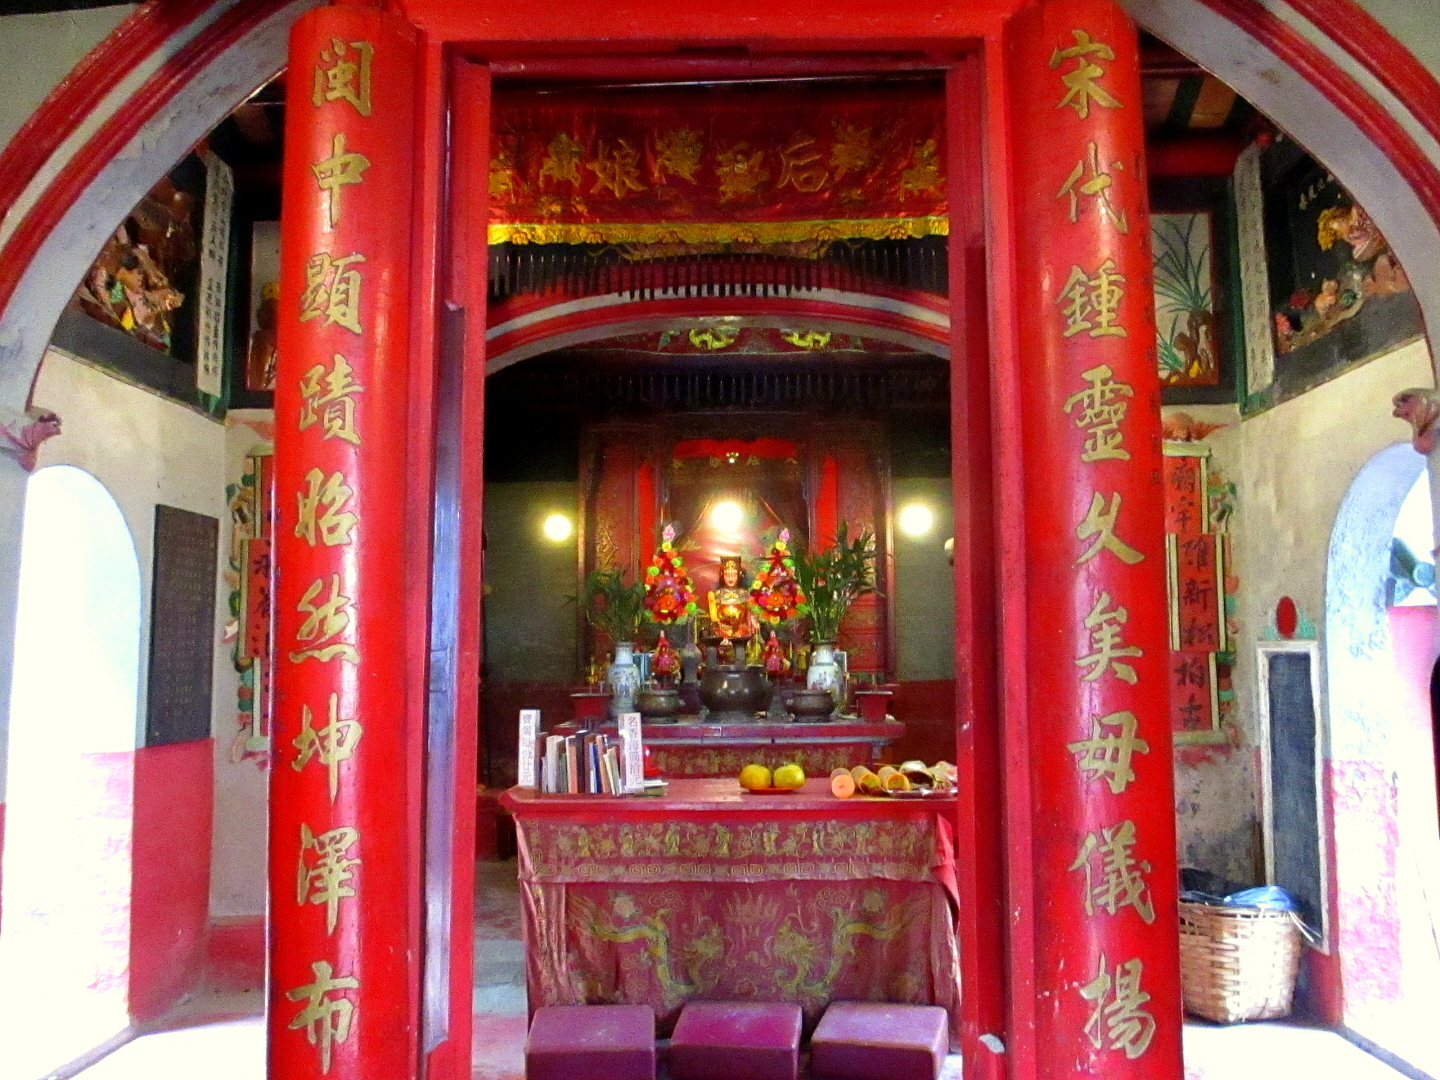 Yuk Hui Temple (Pak Tai Temple), Cheung Chau Island, Hong Kong